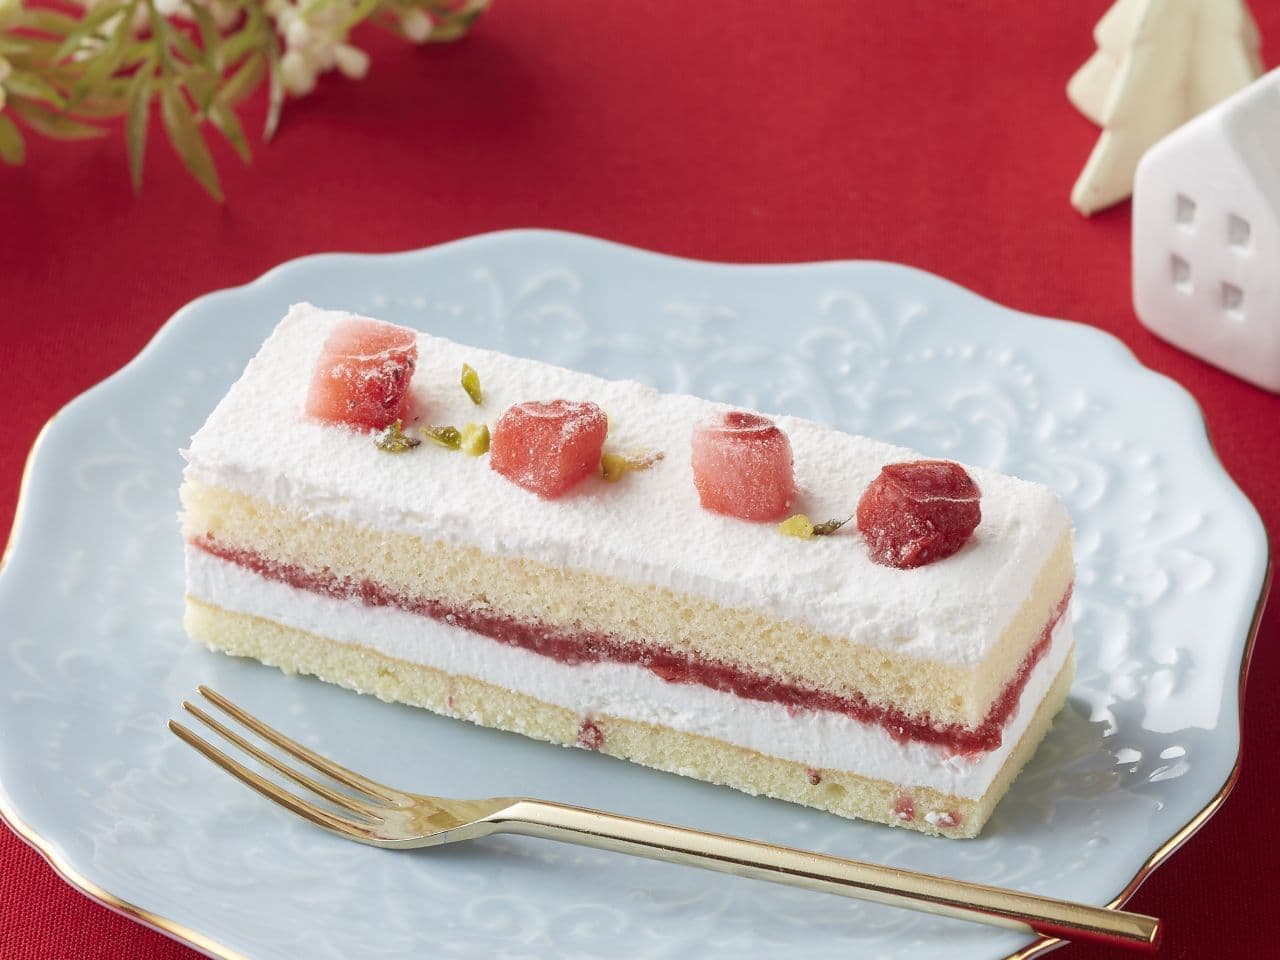 Ministop "Ice Cake Strawberry Shortcake"